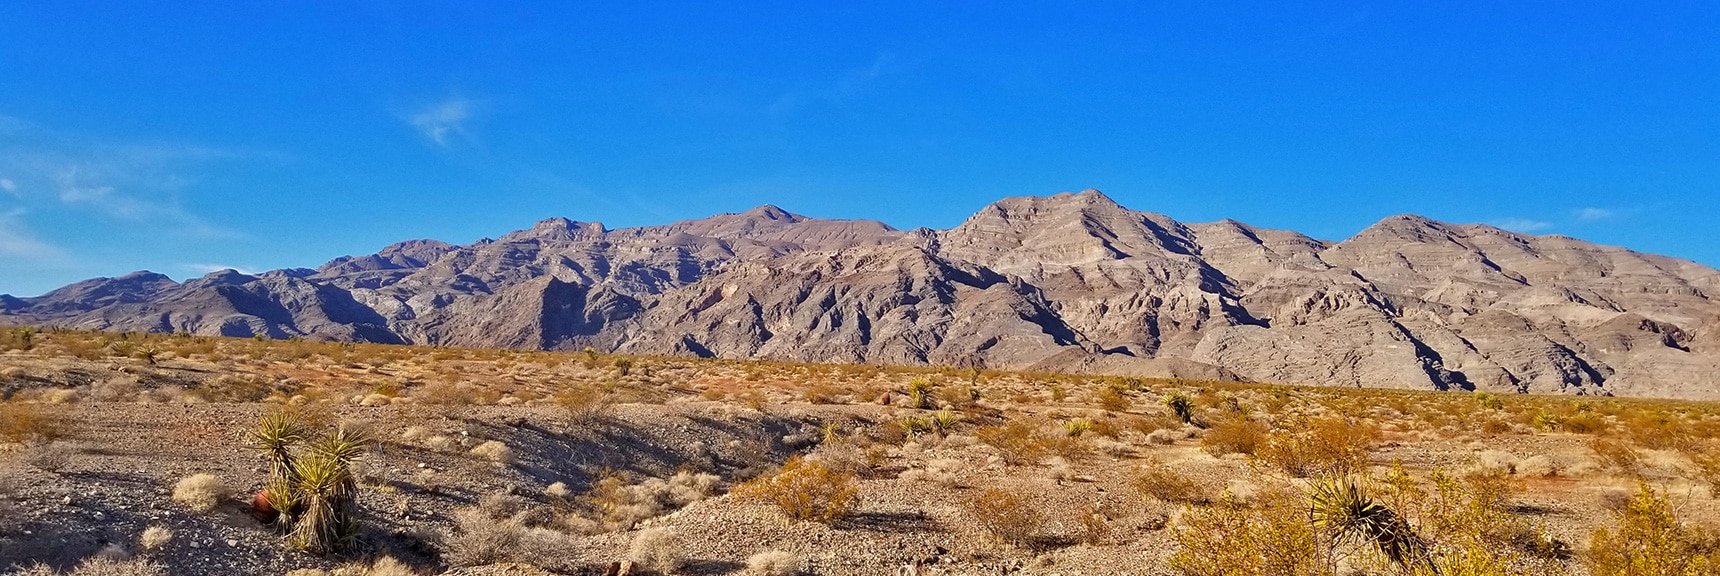 Gass Peak Viewed from Base of Pass at Power Lines | Gass Peak Road Circuit | Desert National Wildlife Refuge | Nevada